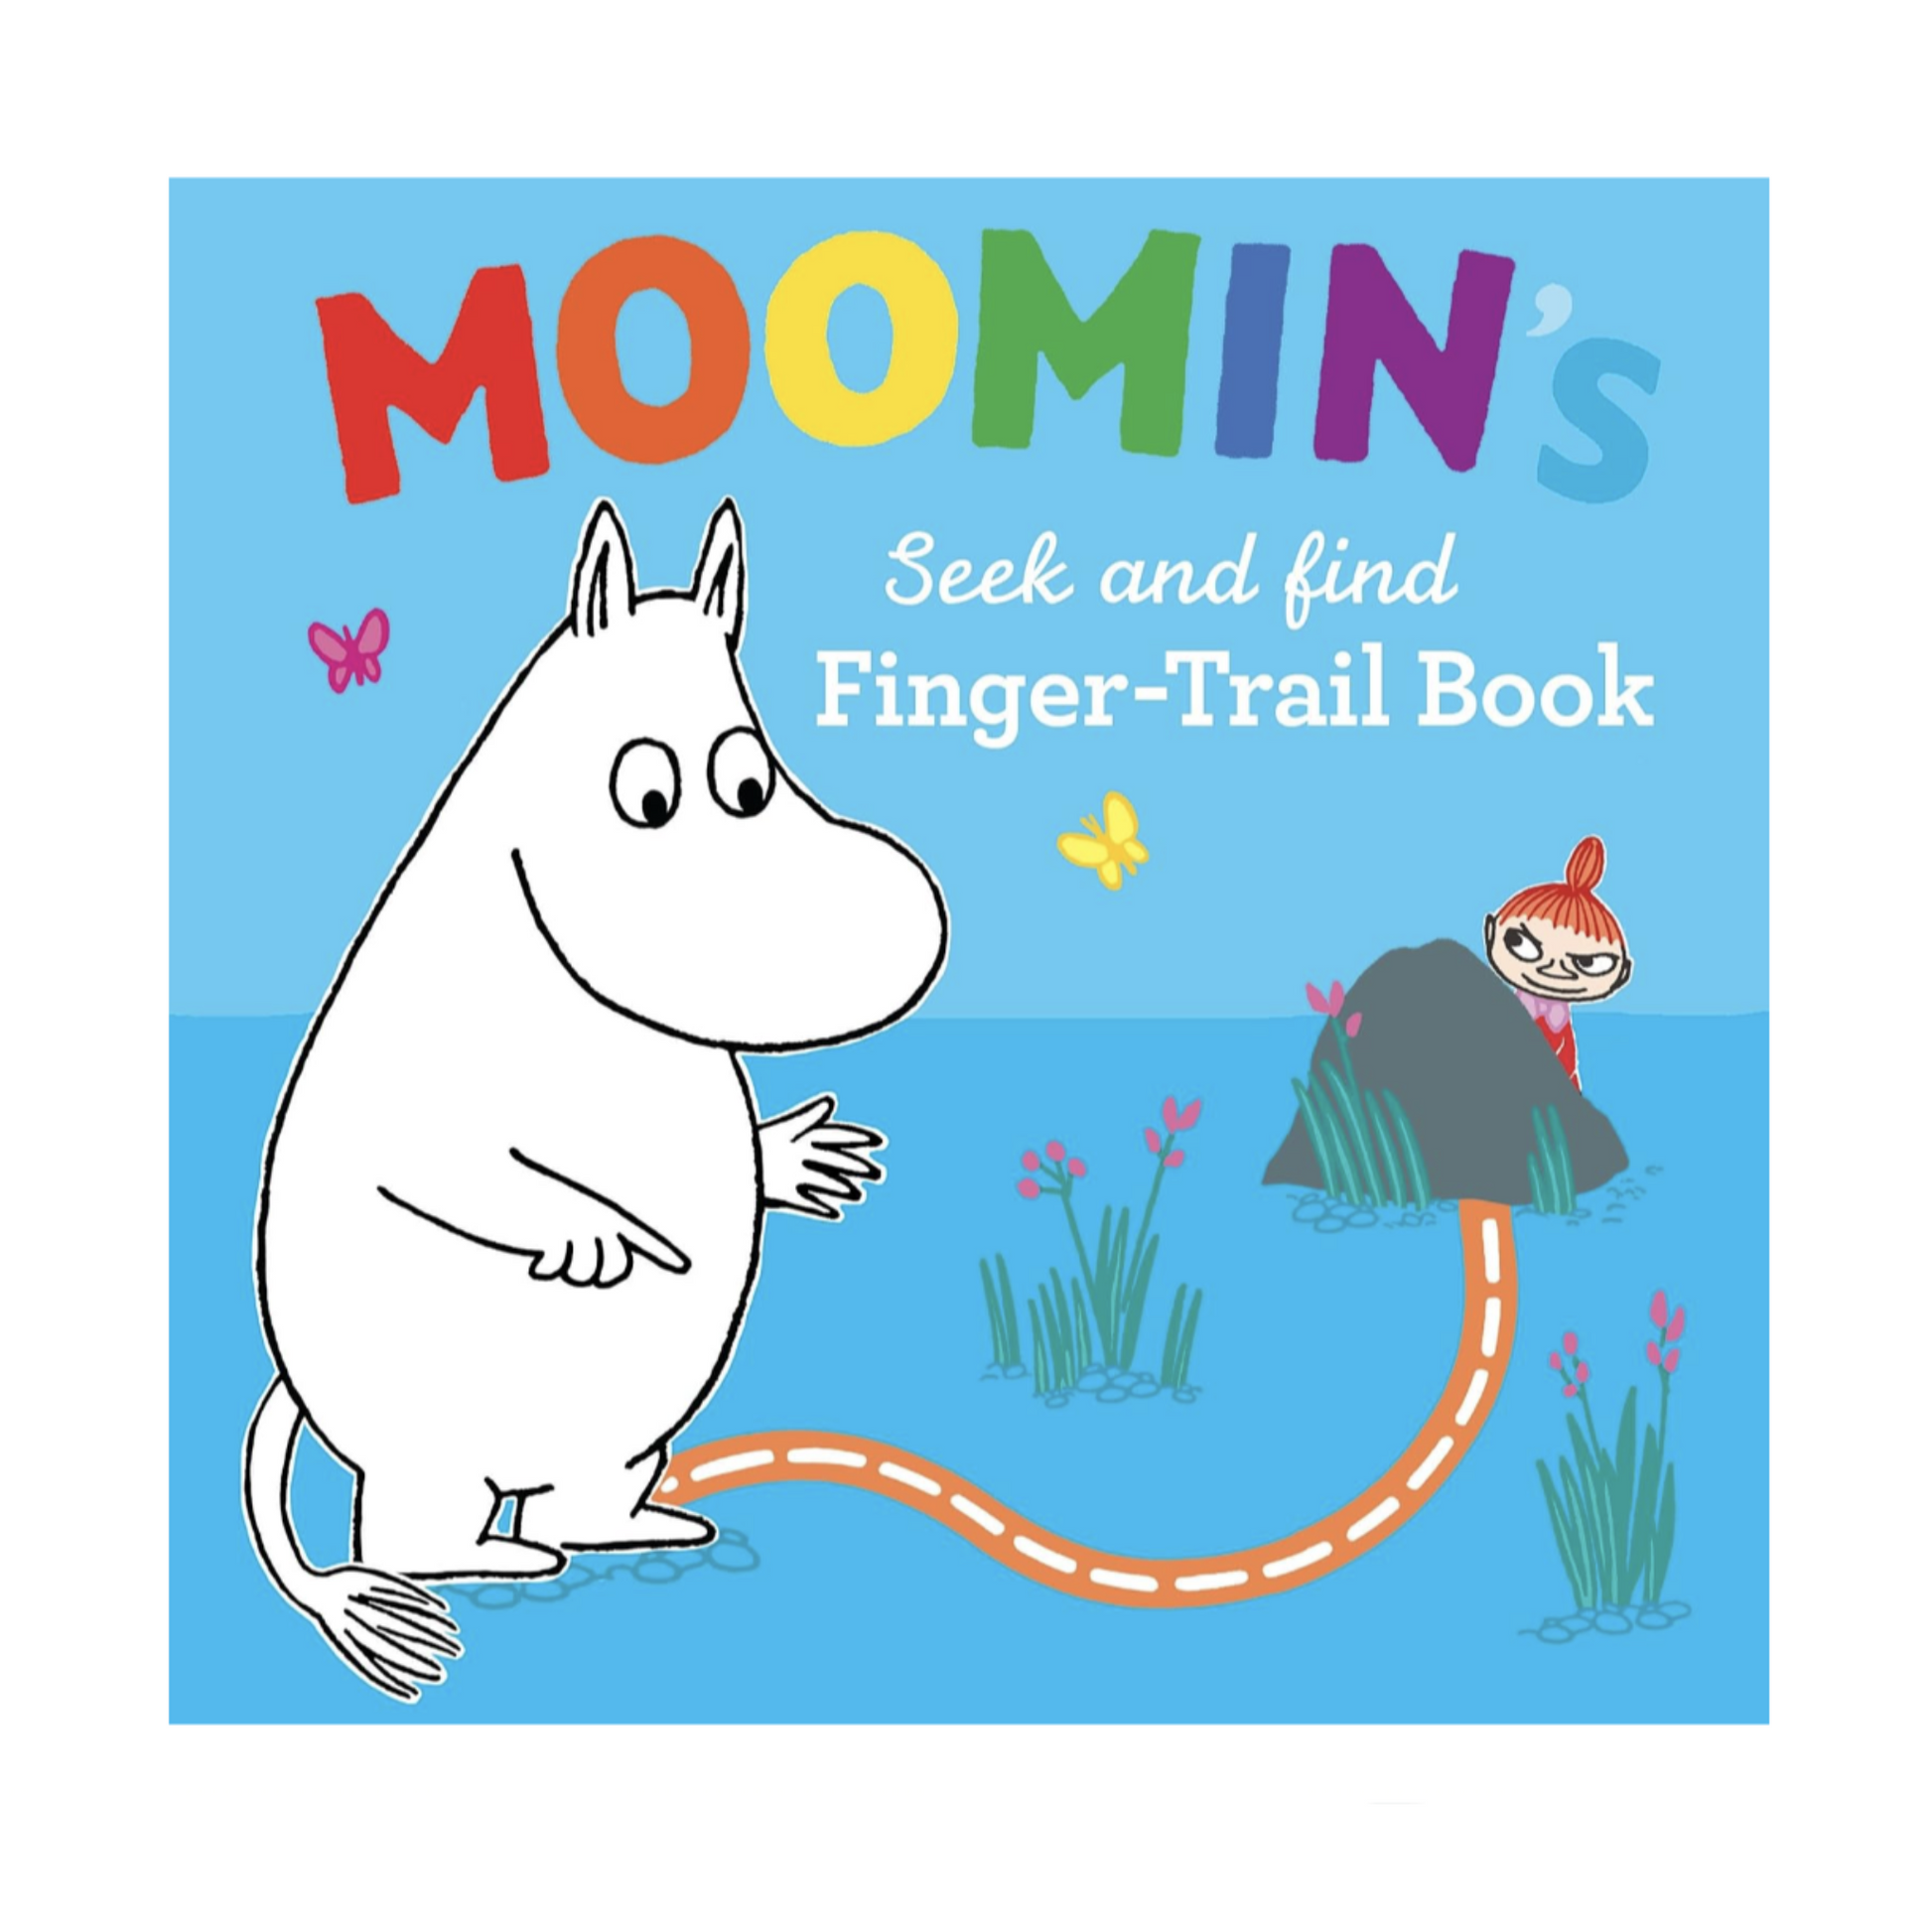 Moomin Seek and find Finger-Trail Book (8917492334879)